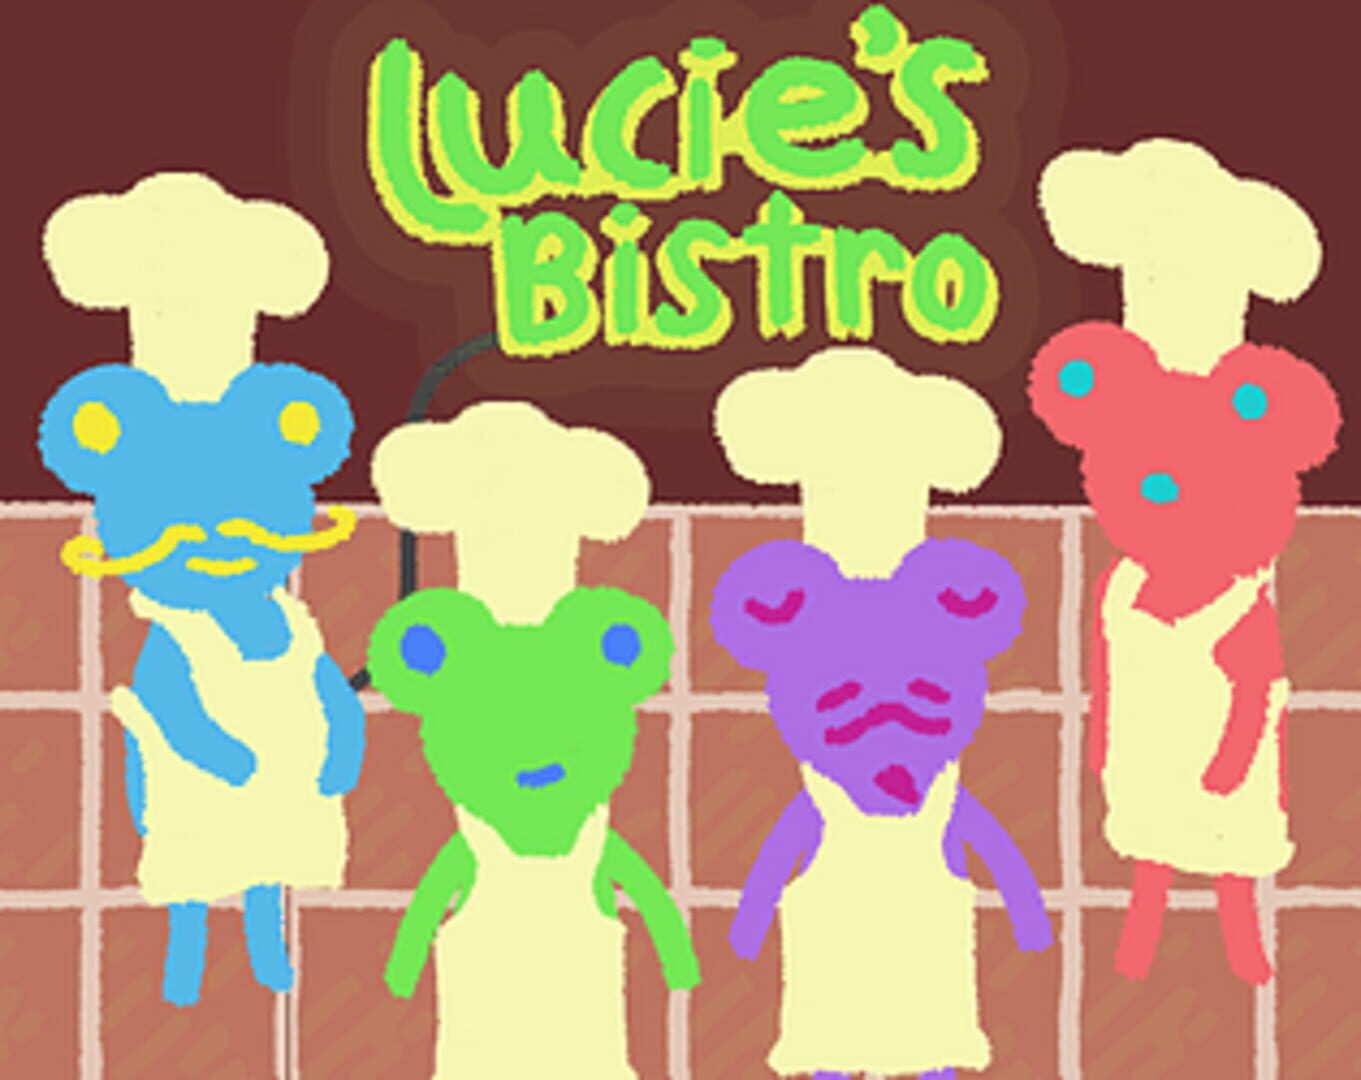 Lucie's Bistro